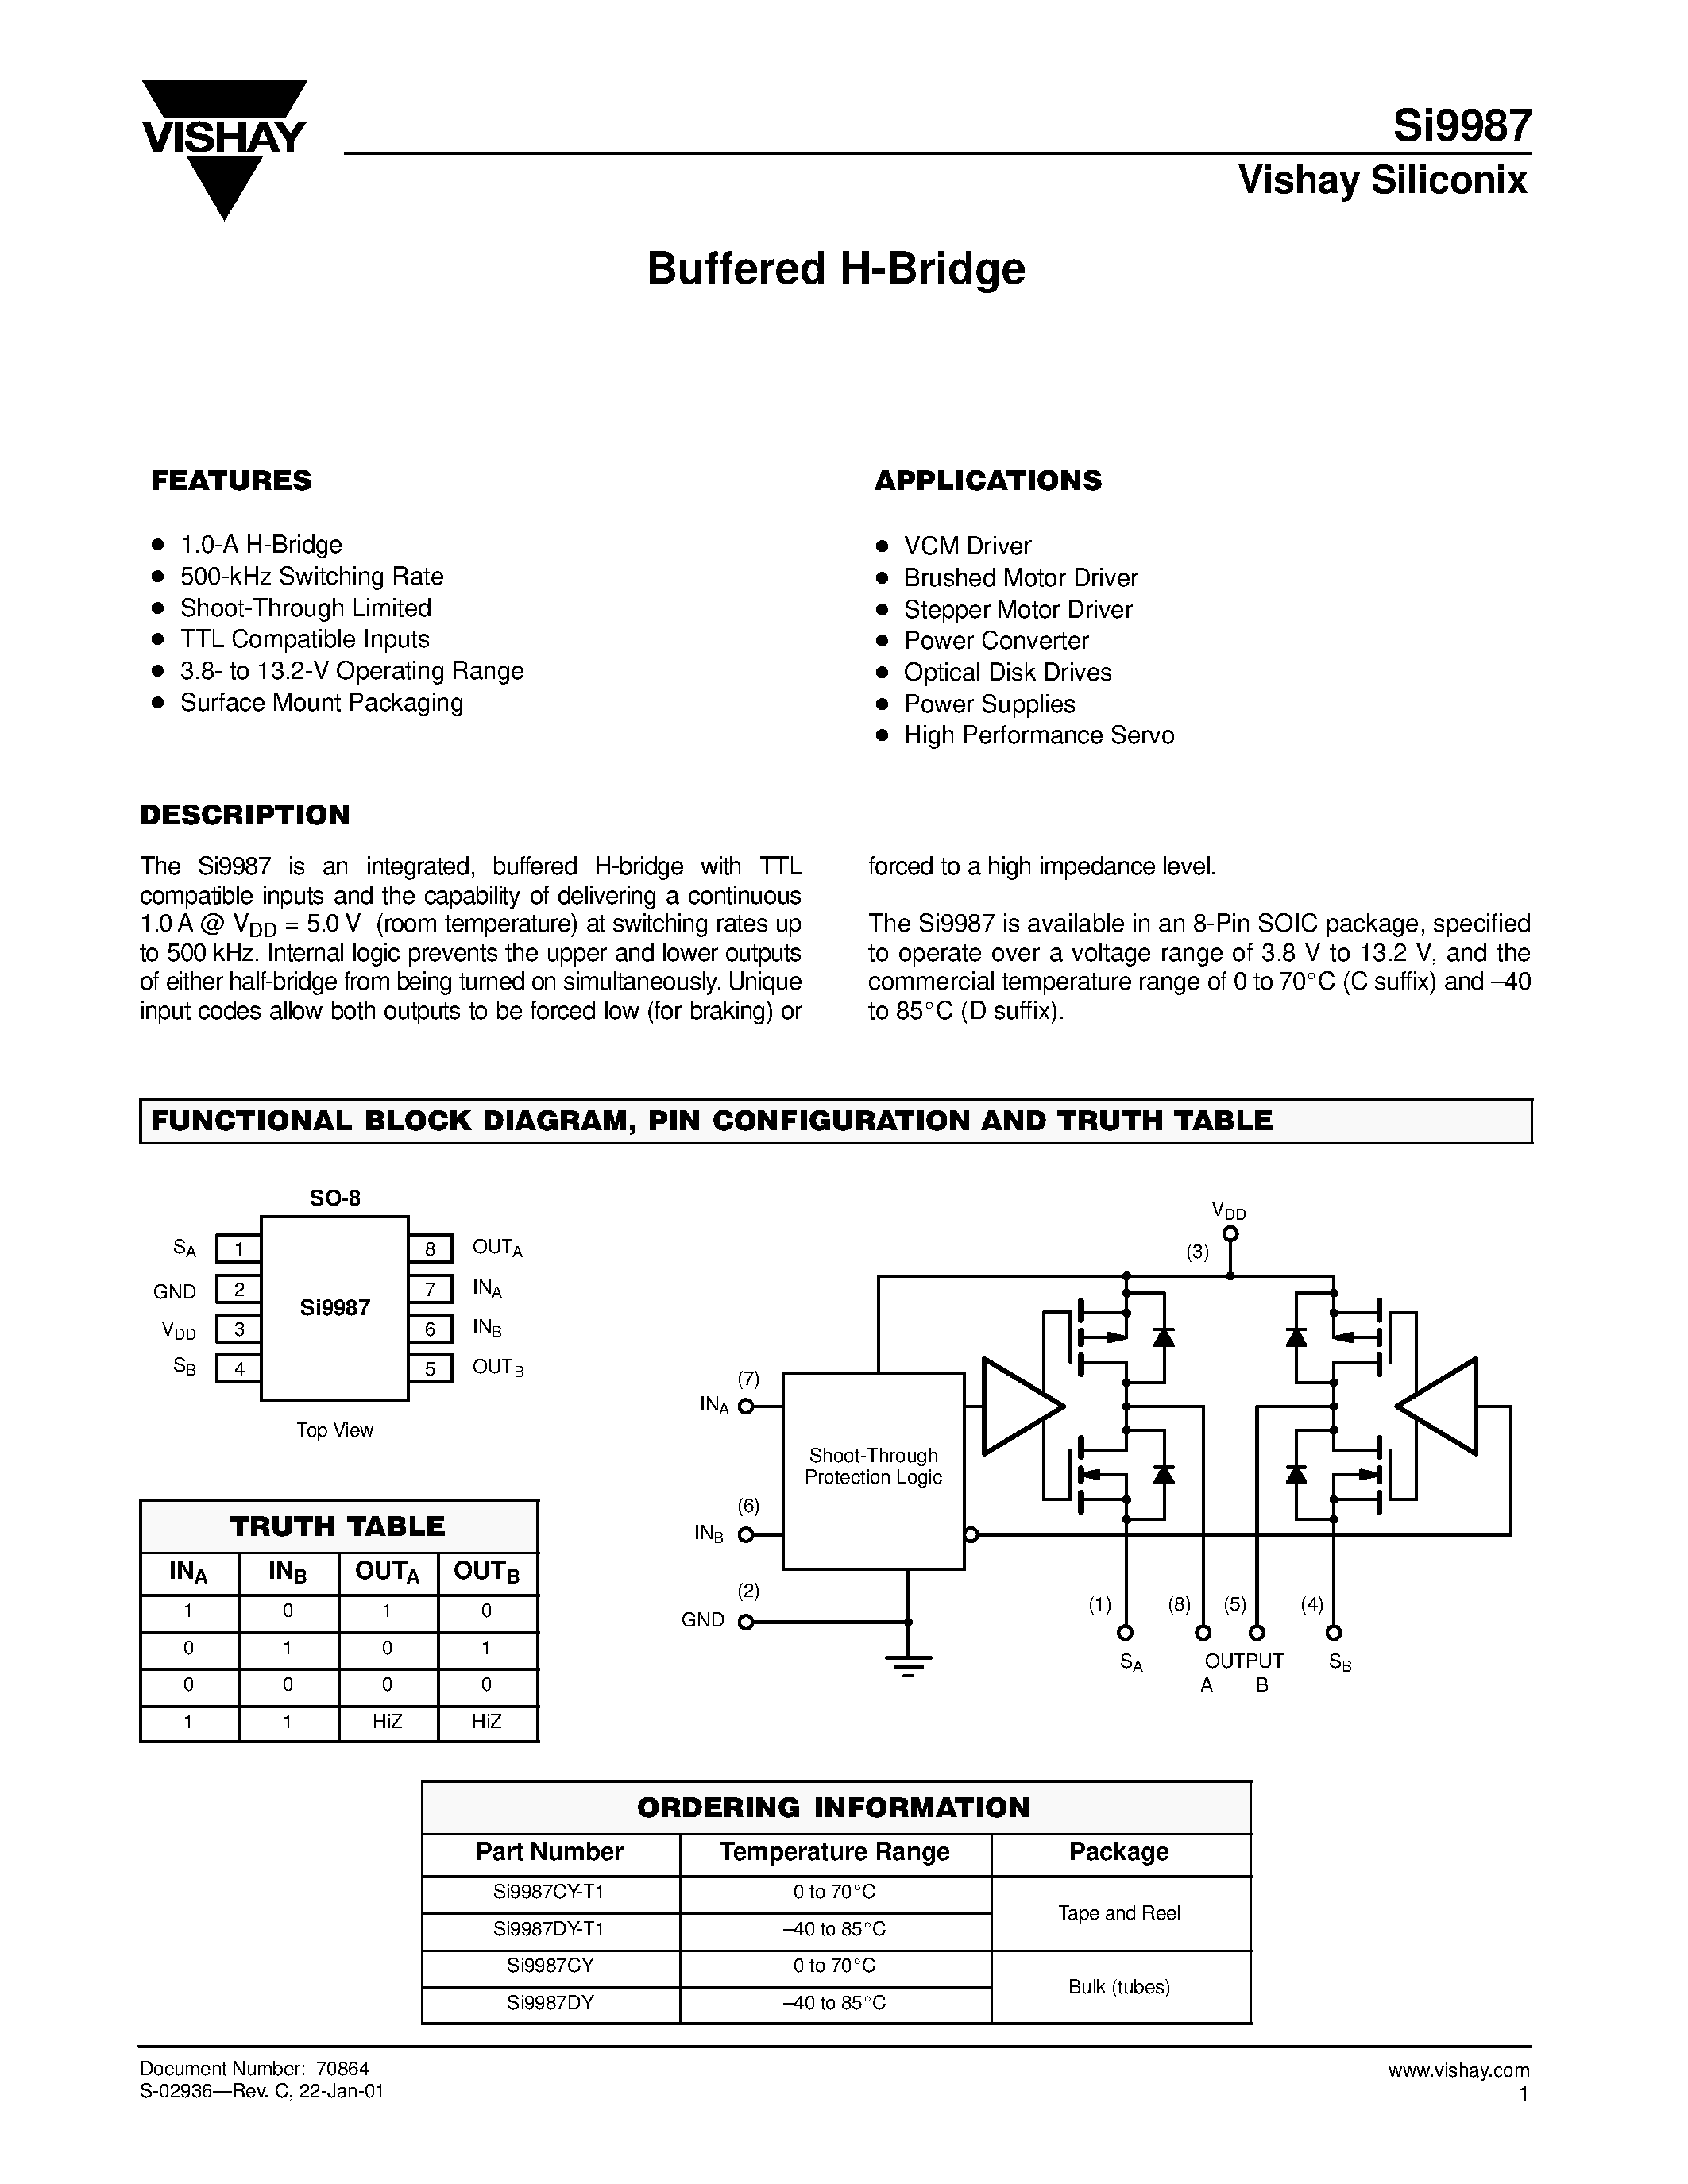 Datasheet Si9987CY - Buffered H-Bridge page 1